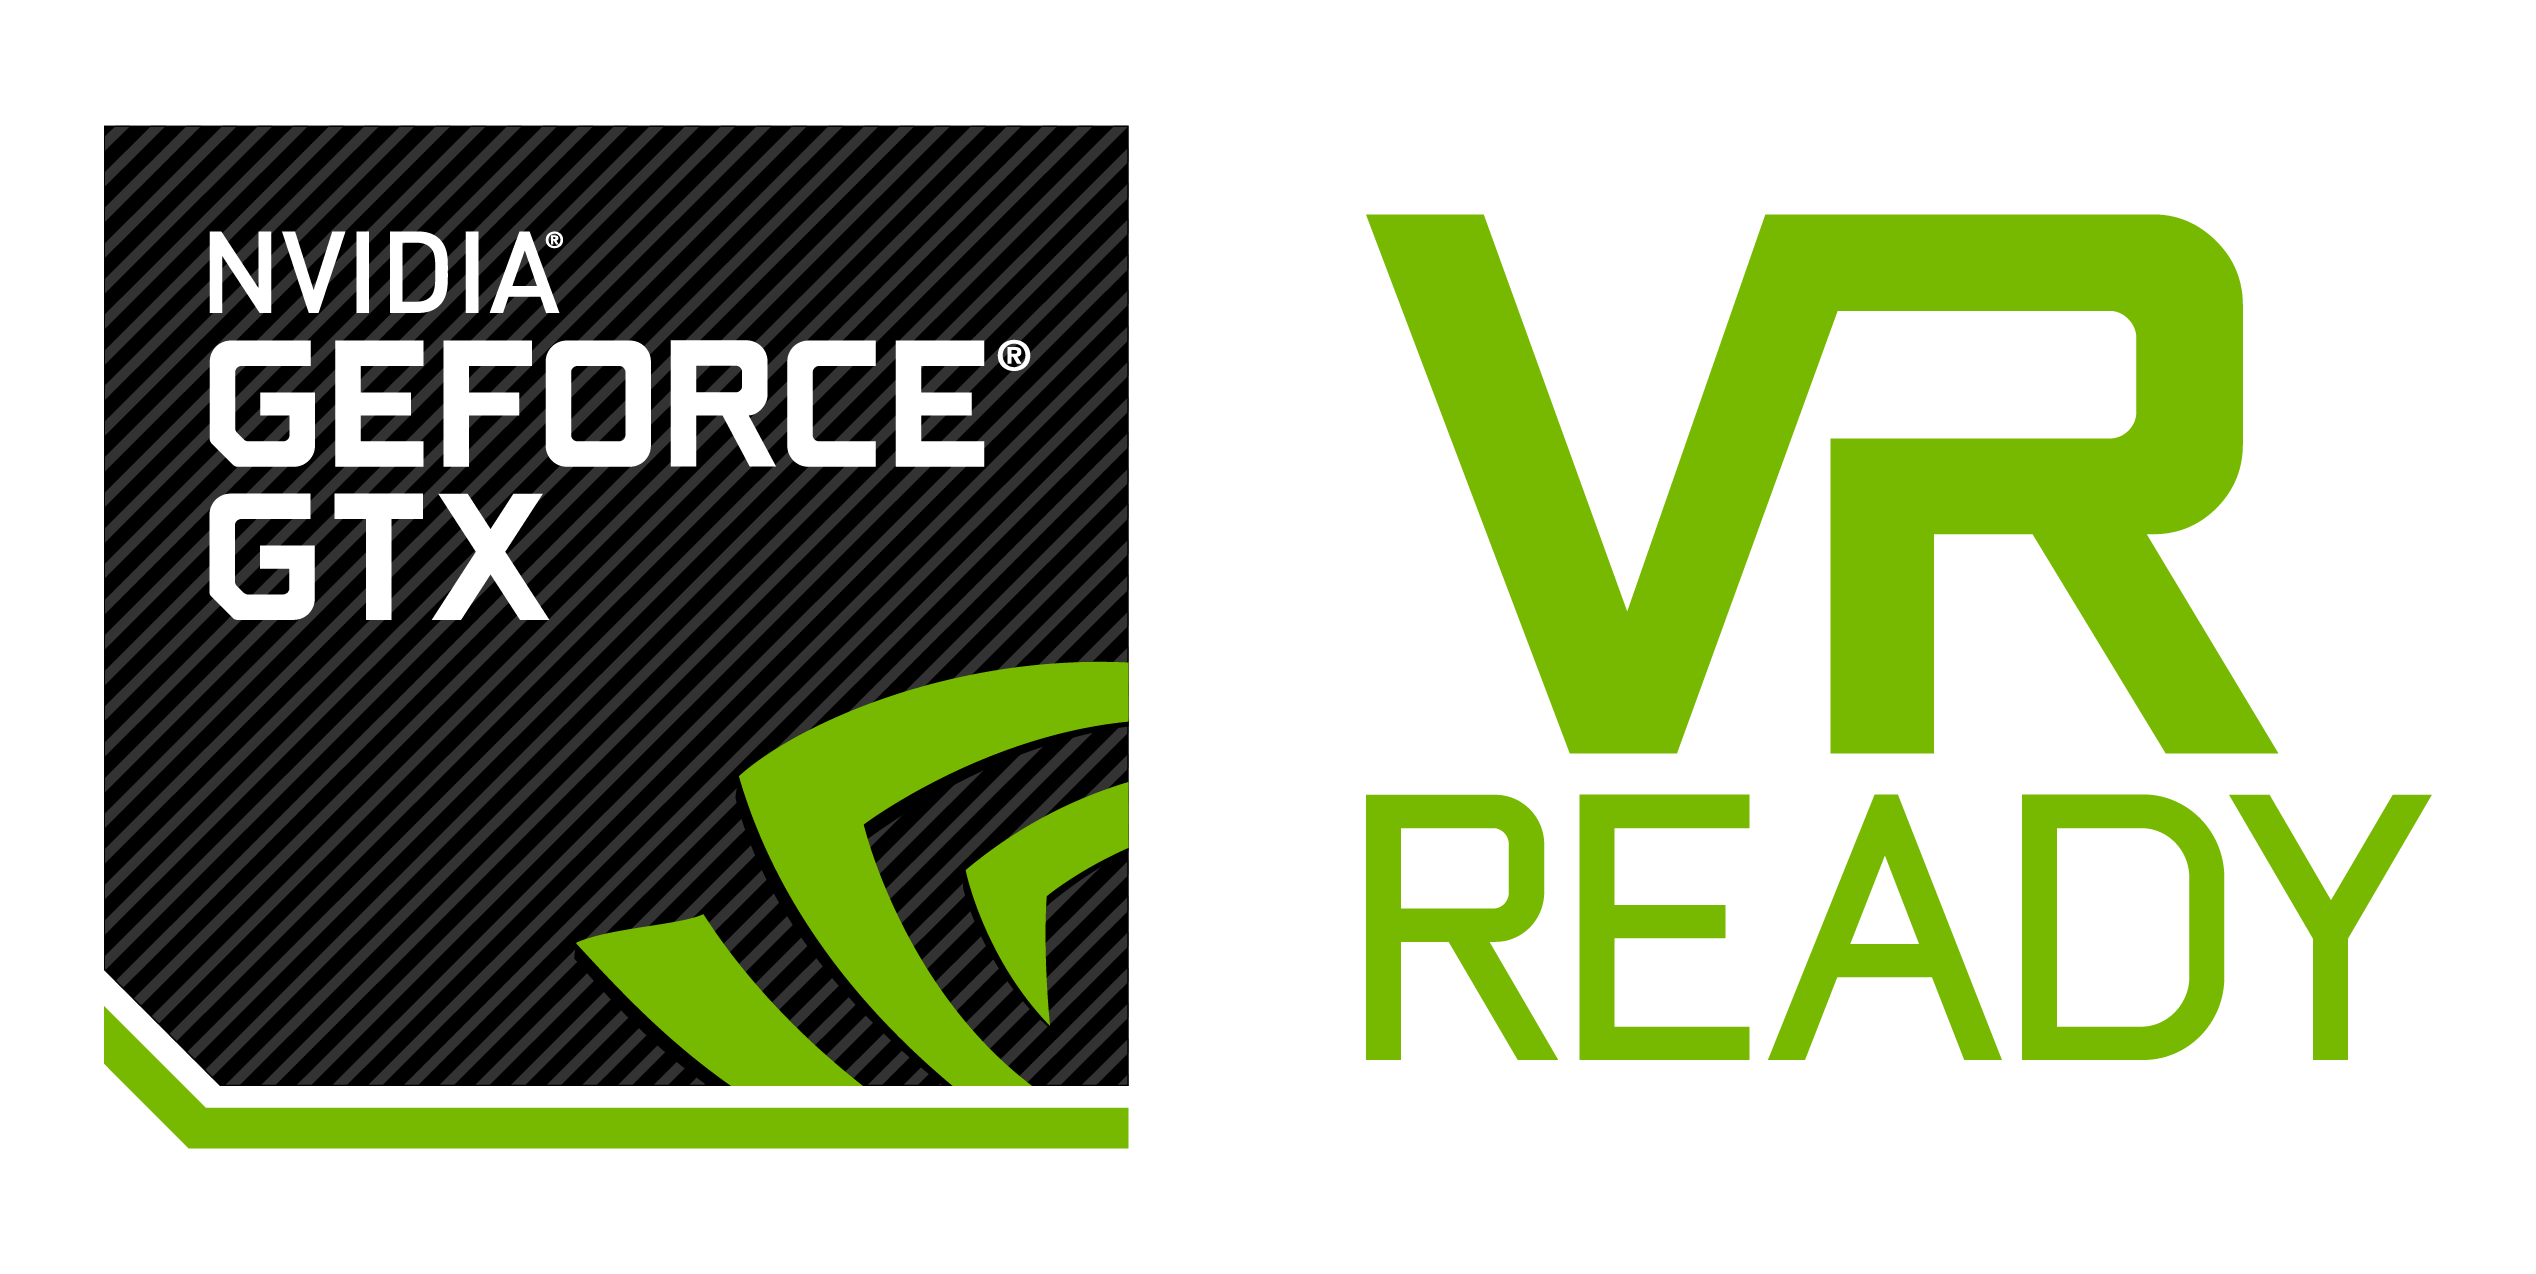 NVIDIA GeForce Logo - MSI VR Ready